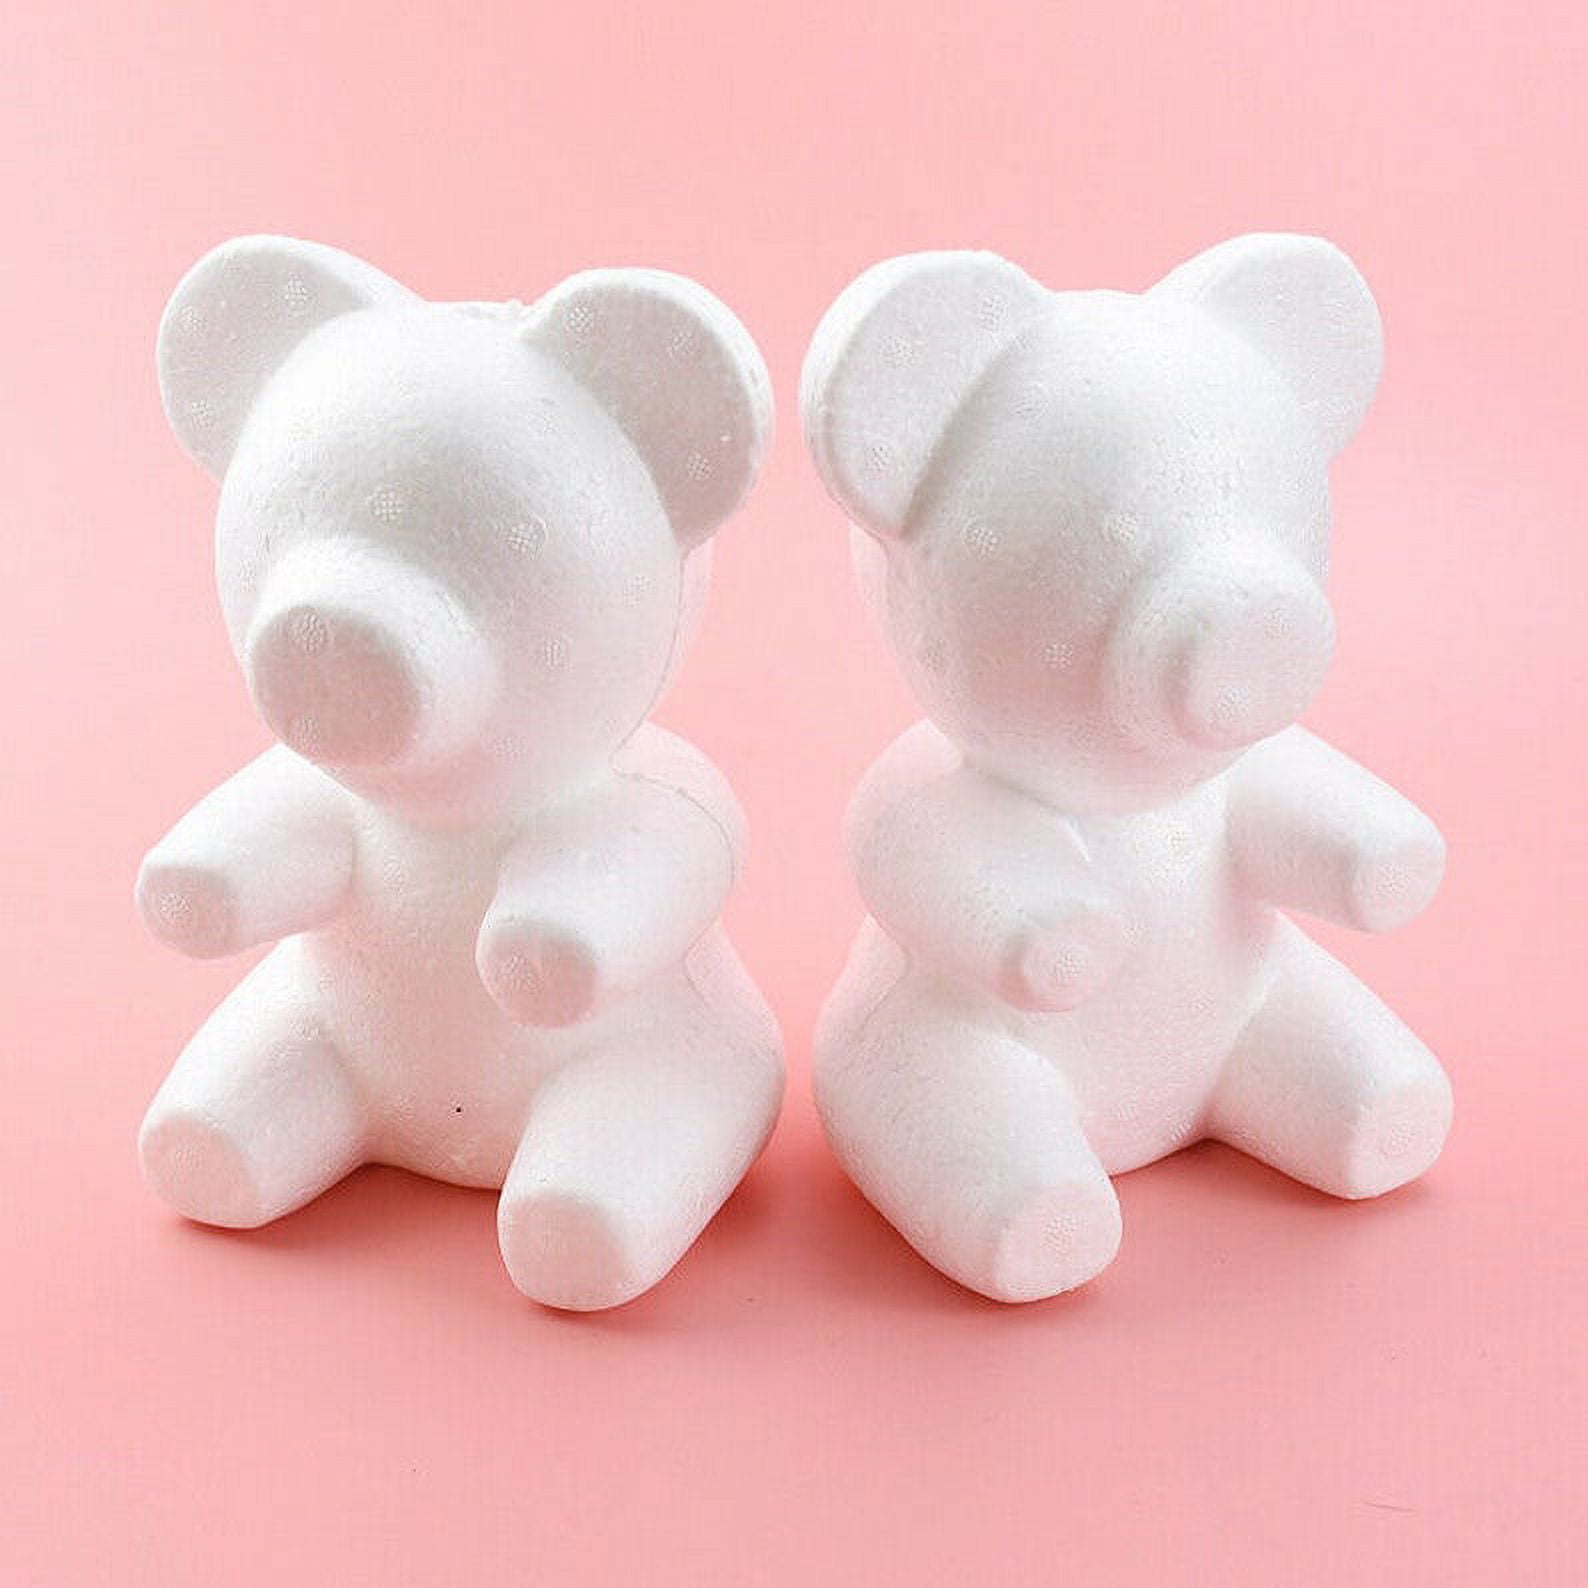 Dropship 1Pc Polystyrene Styrofoam Foam Heart Rose Bear Crafts For